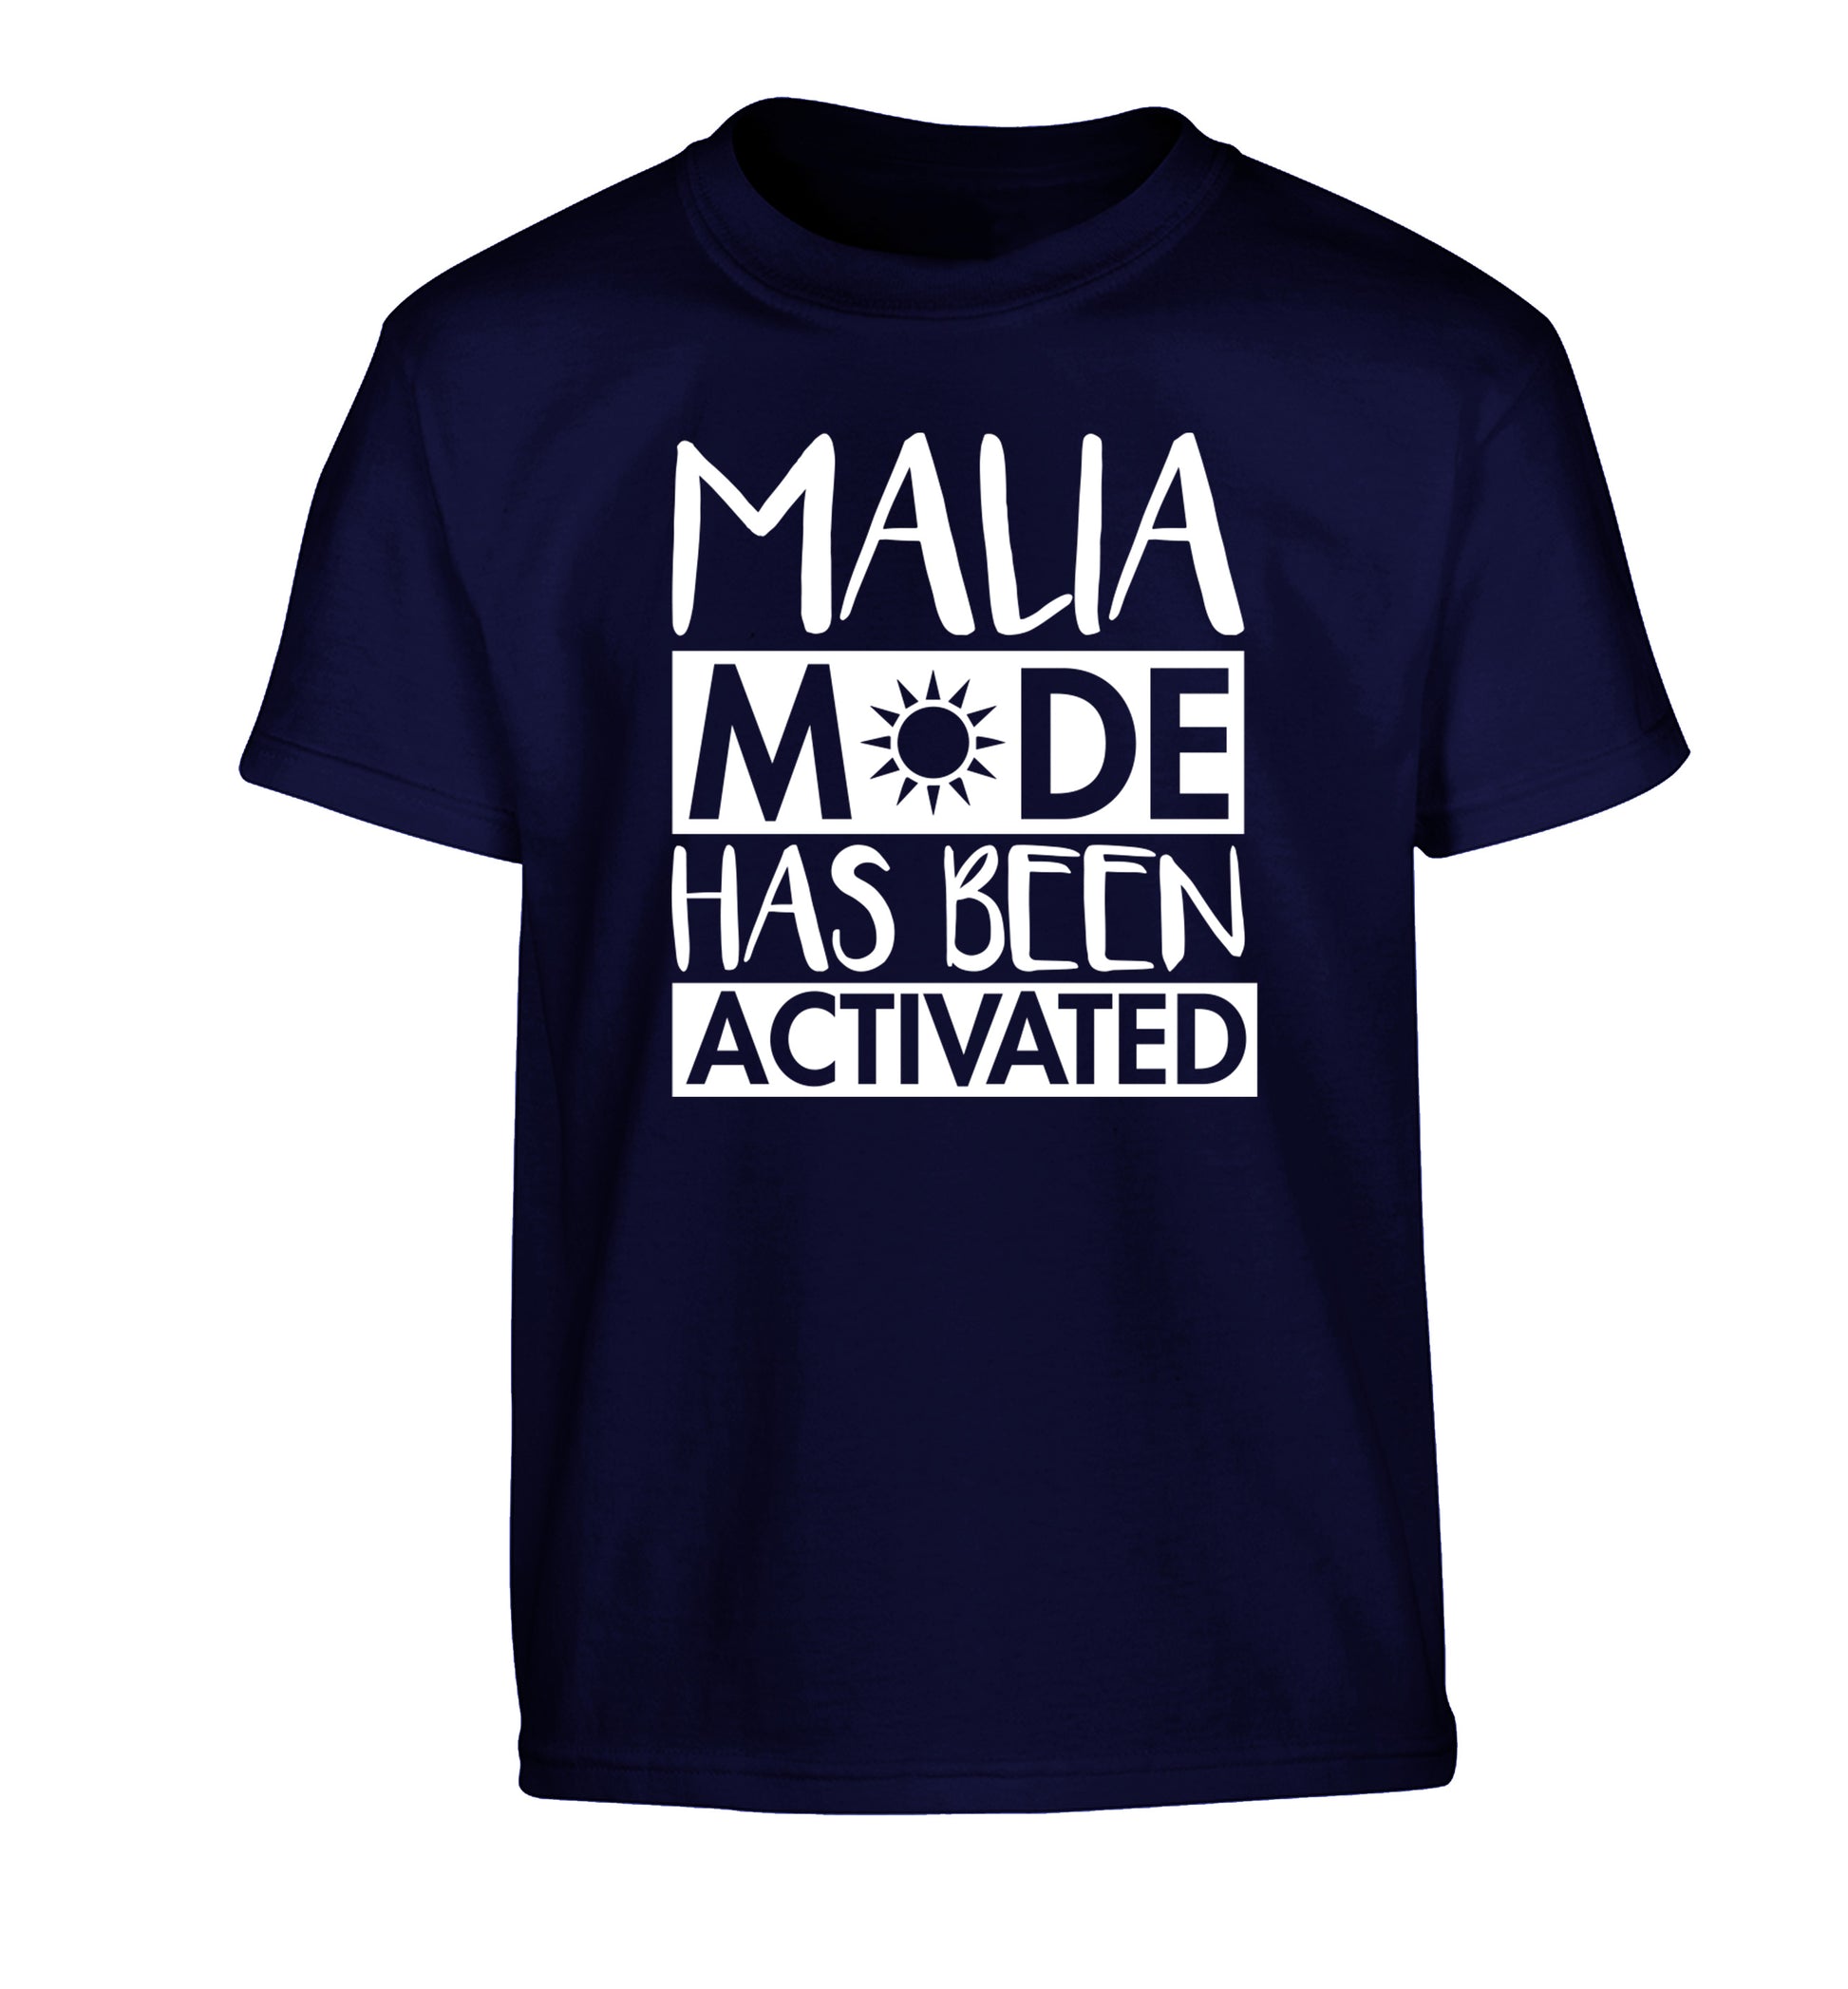 Malia mode has been activated Children's navy Tshirt 12-13 Years